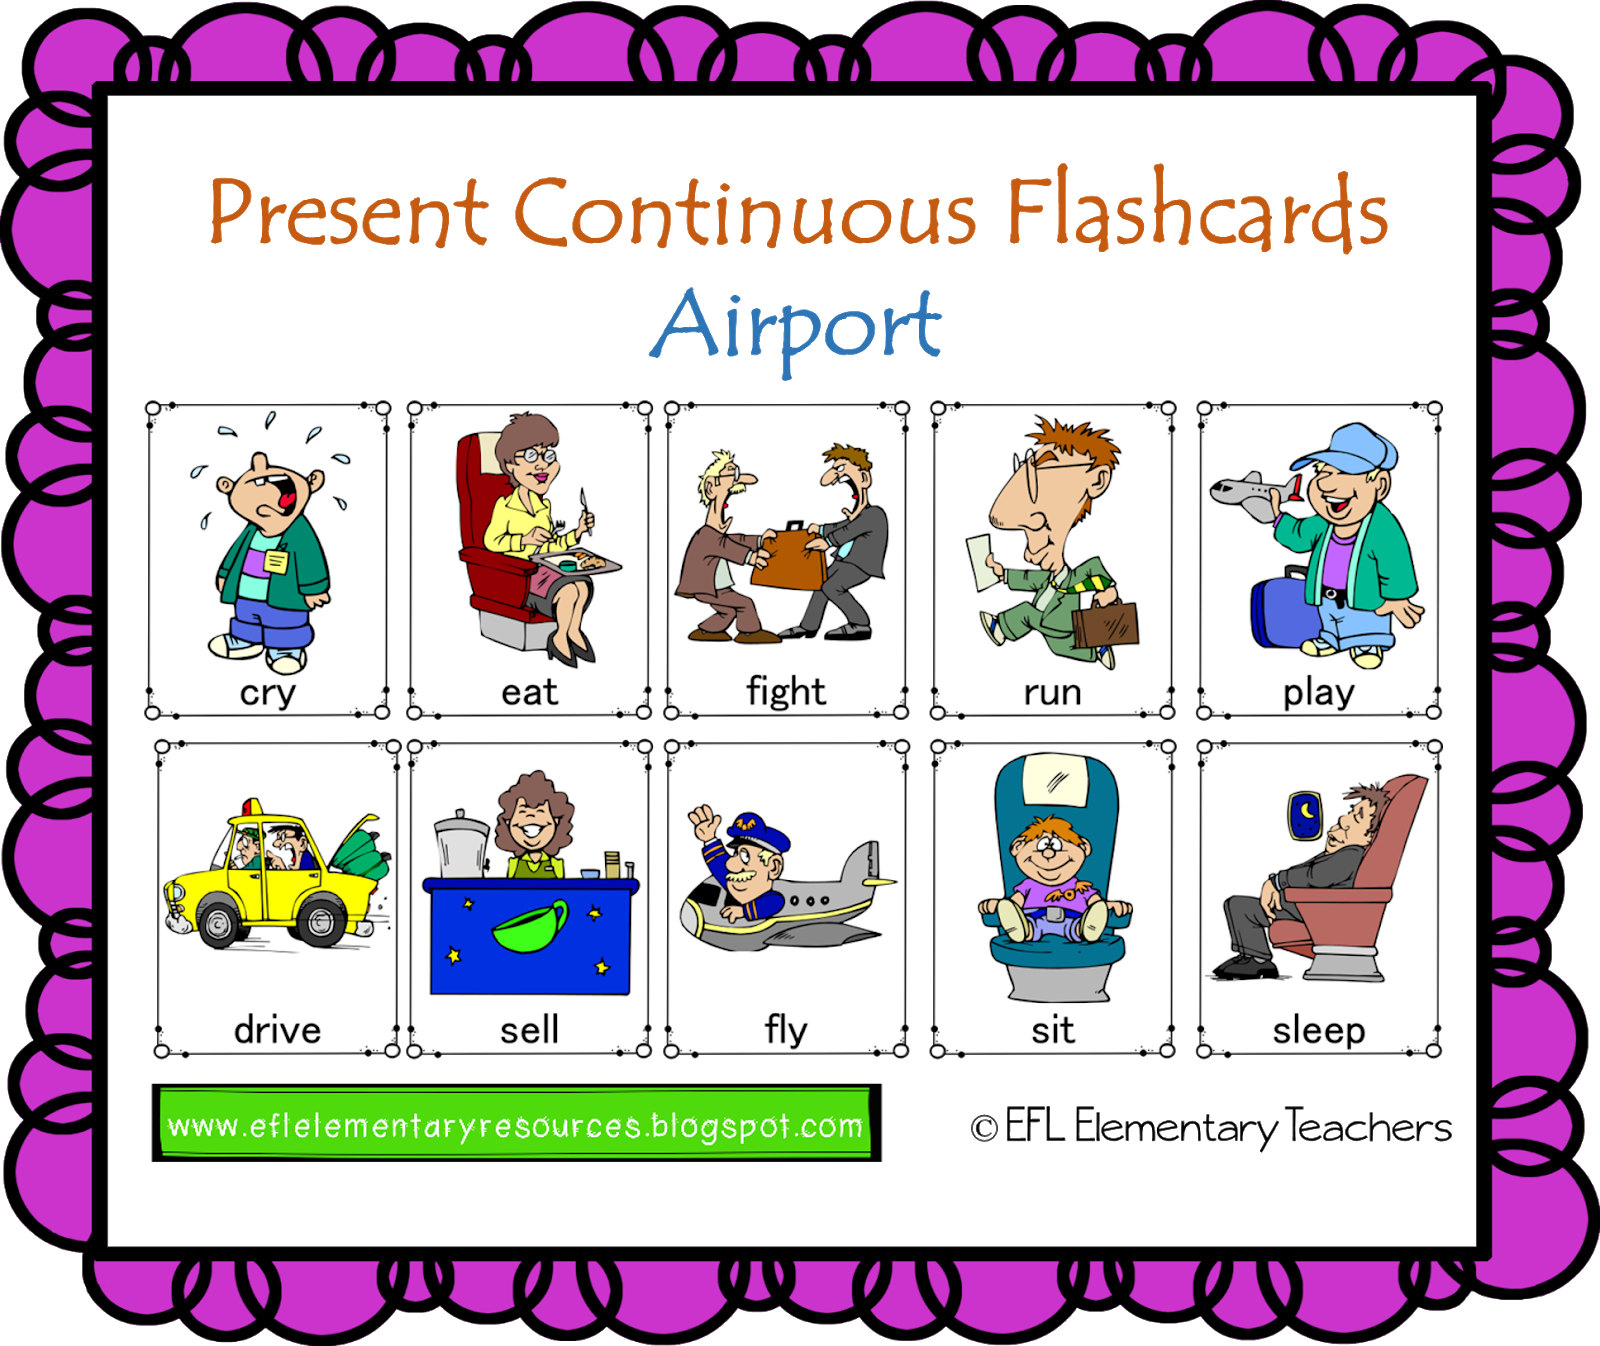 Present Continuous. Present Continuous упражнения с картинками. Present Continuous карточки. Картинки для present Continuous для детей. Continuous game for kids